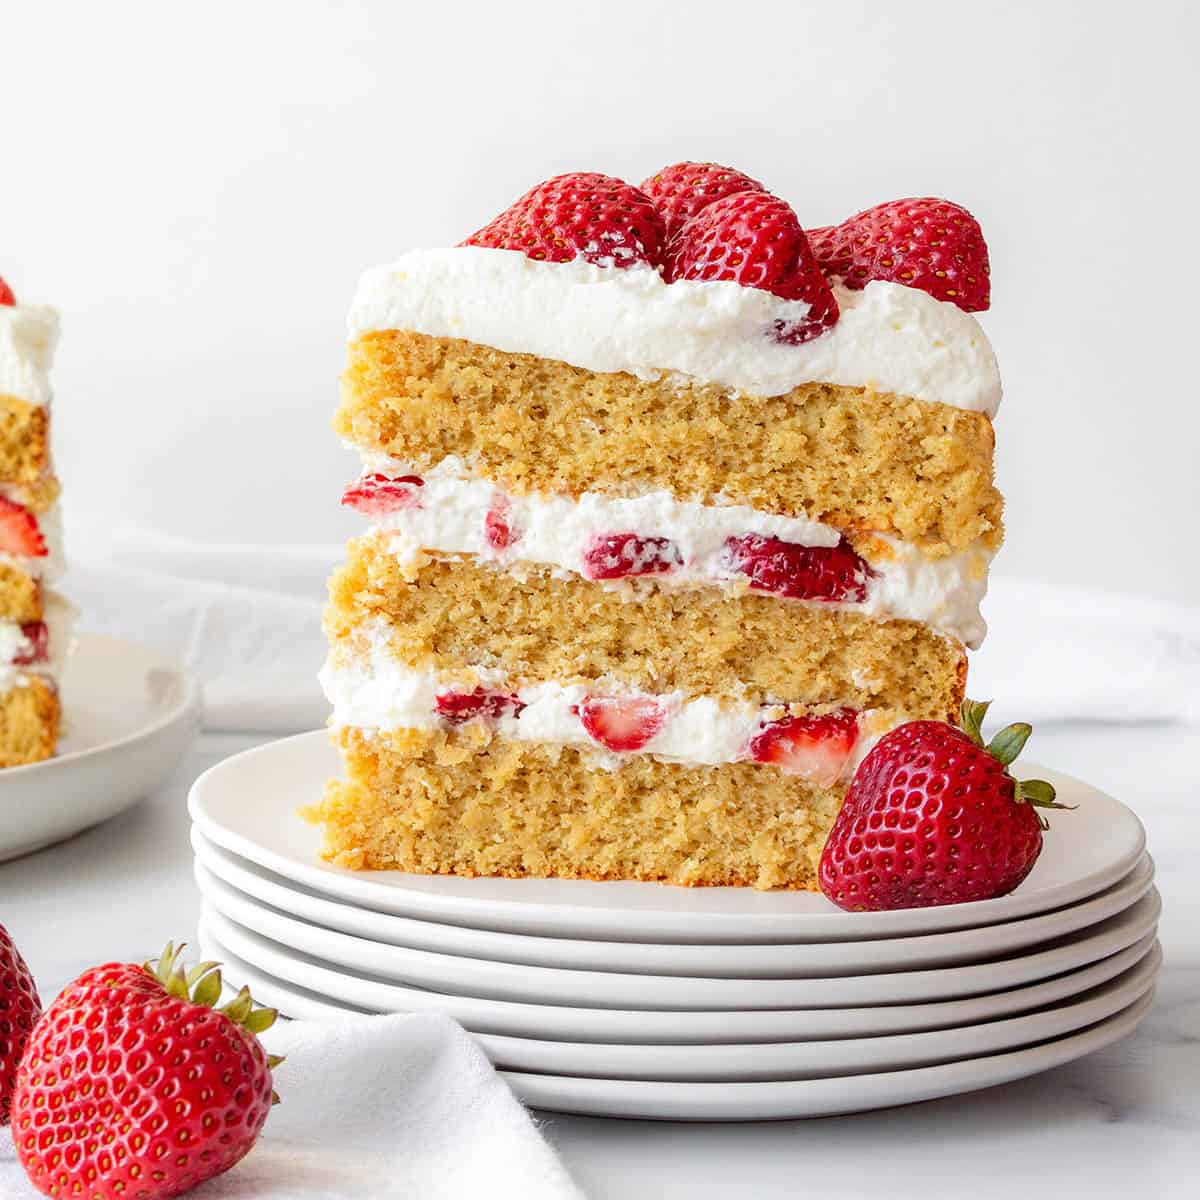 vanilla layer cake with strawberries and whipped cream